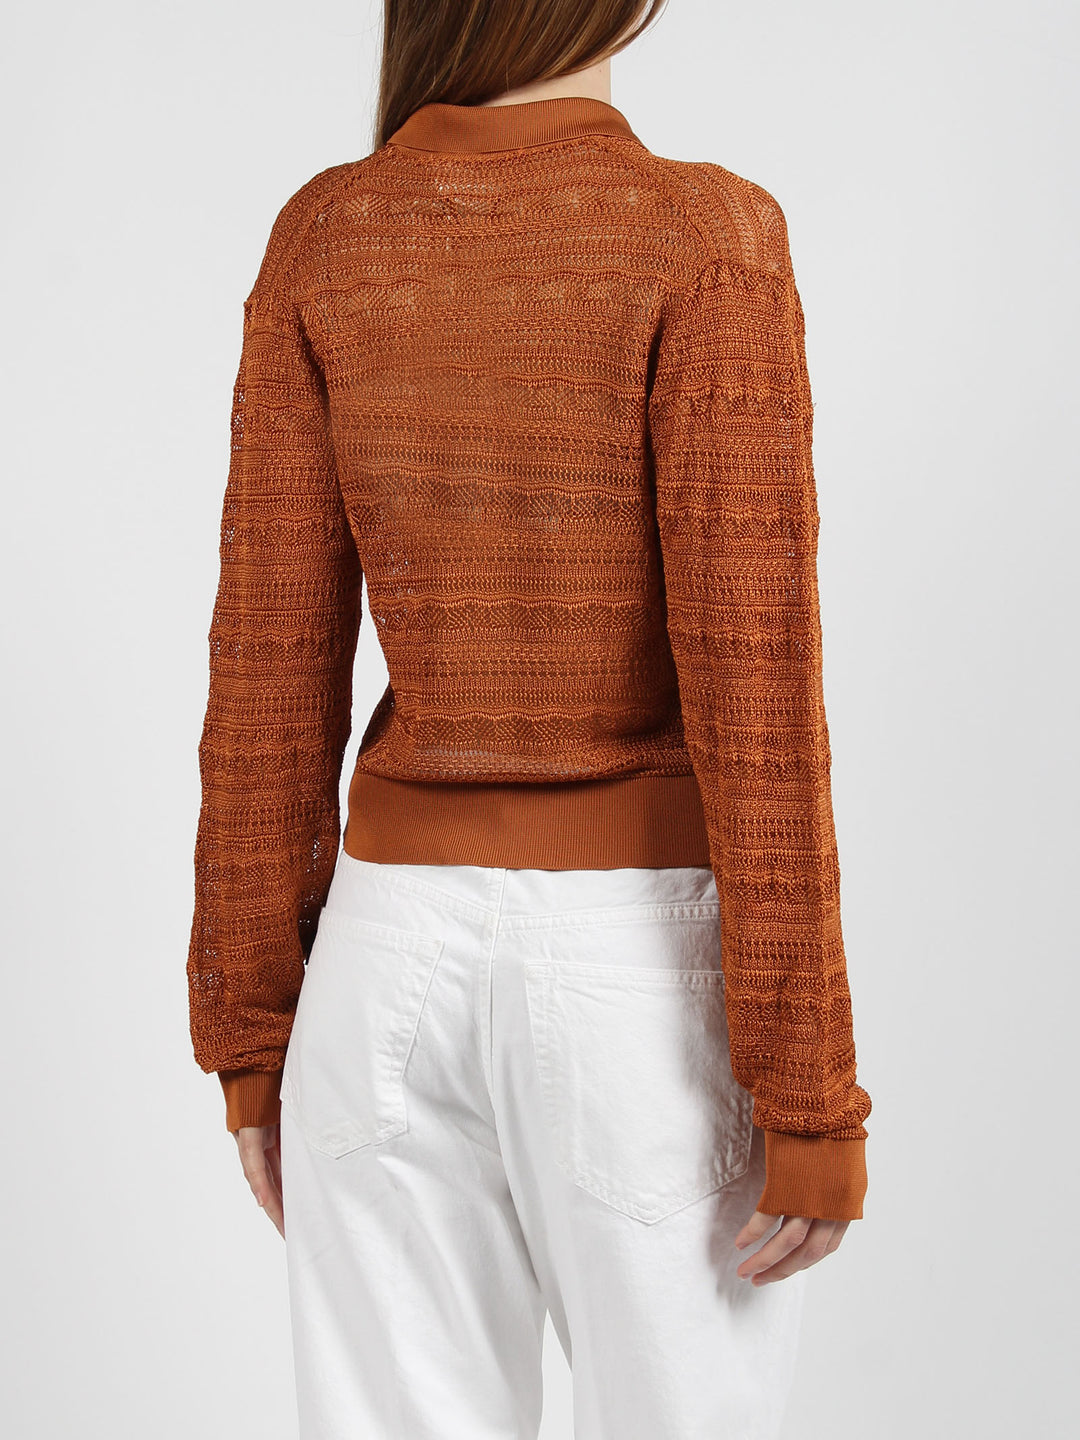 Crochet viscose knit shirt